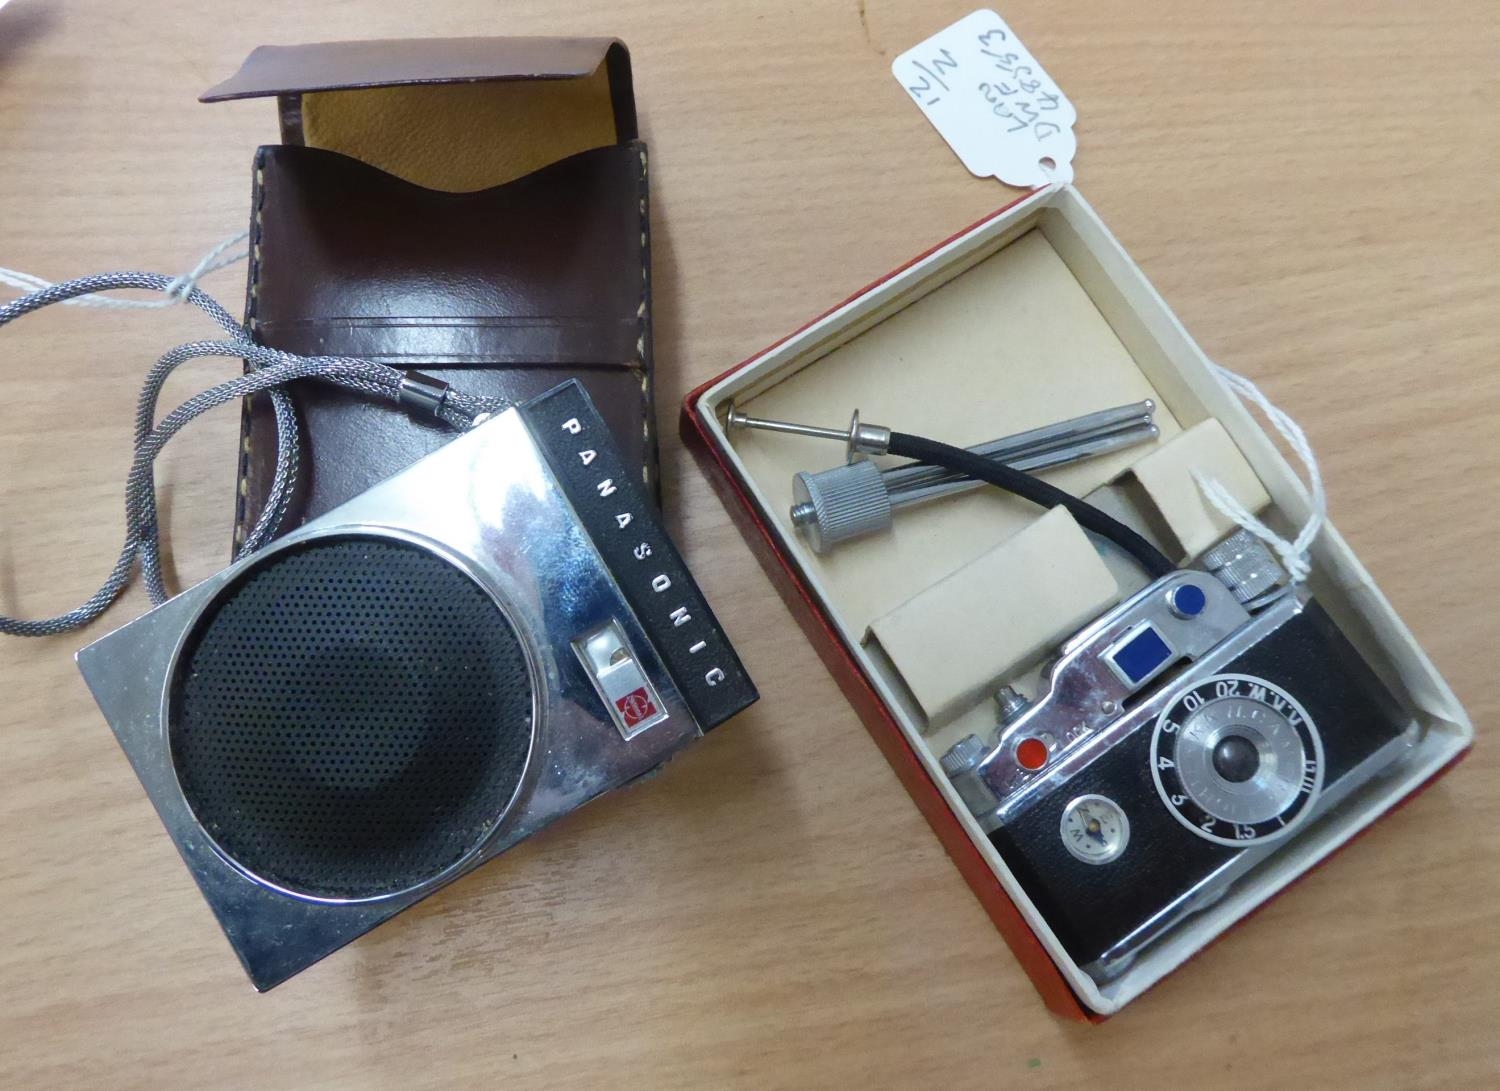 Panasonic model R-111 pocket transistor radio, in leather case and Photo Flash miniature camera